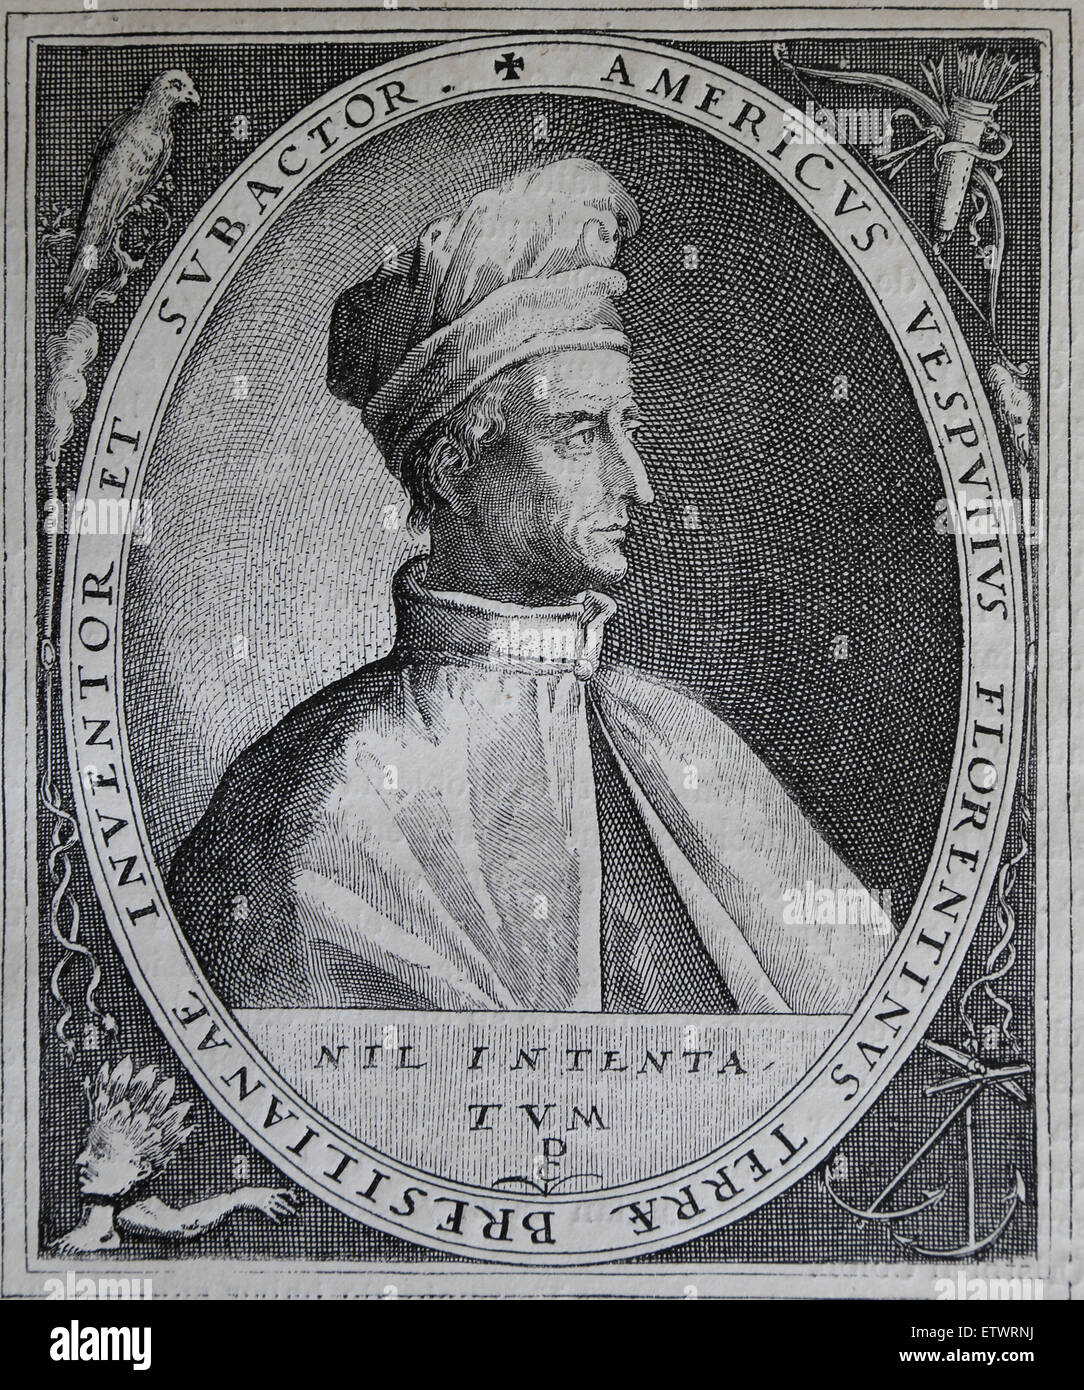 Amerigo Vespucci (1454-1512). Italian explorer, financier, navigator and cartographer. Engraving. Stock Photo